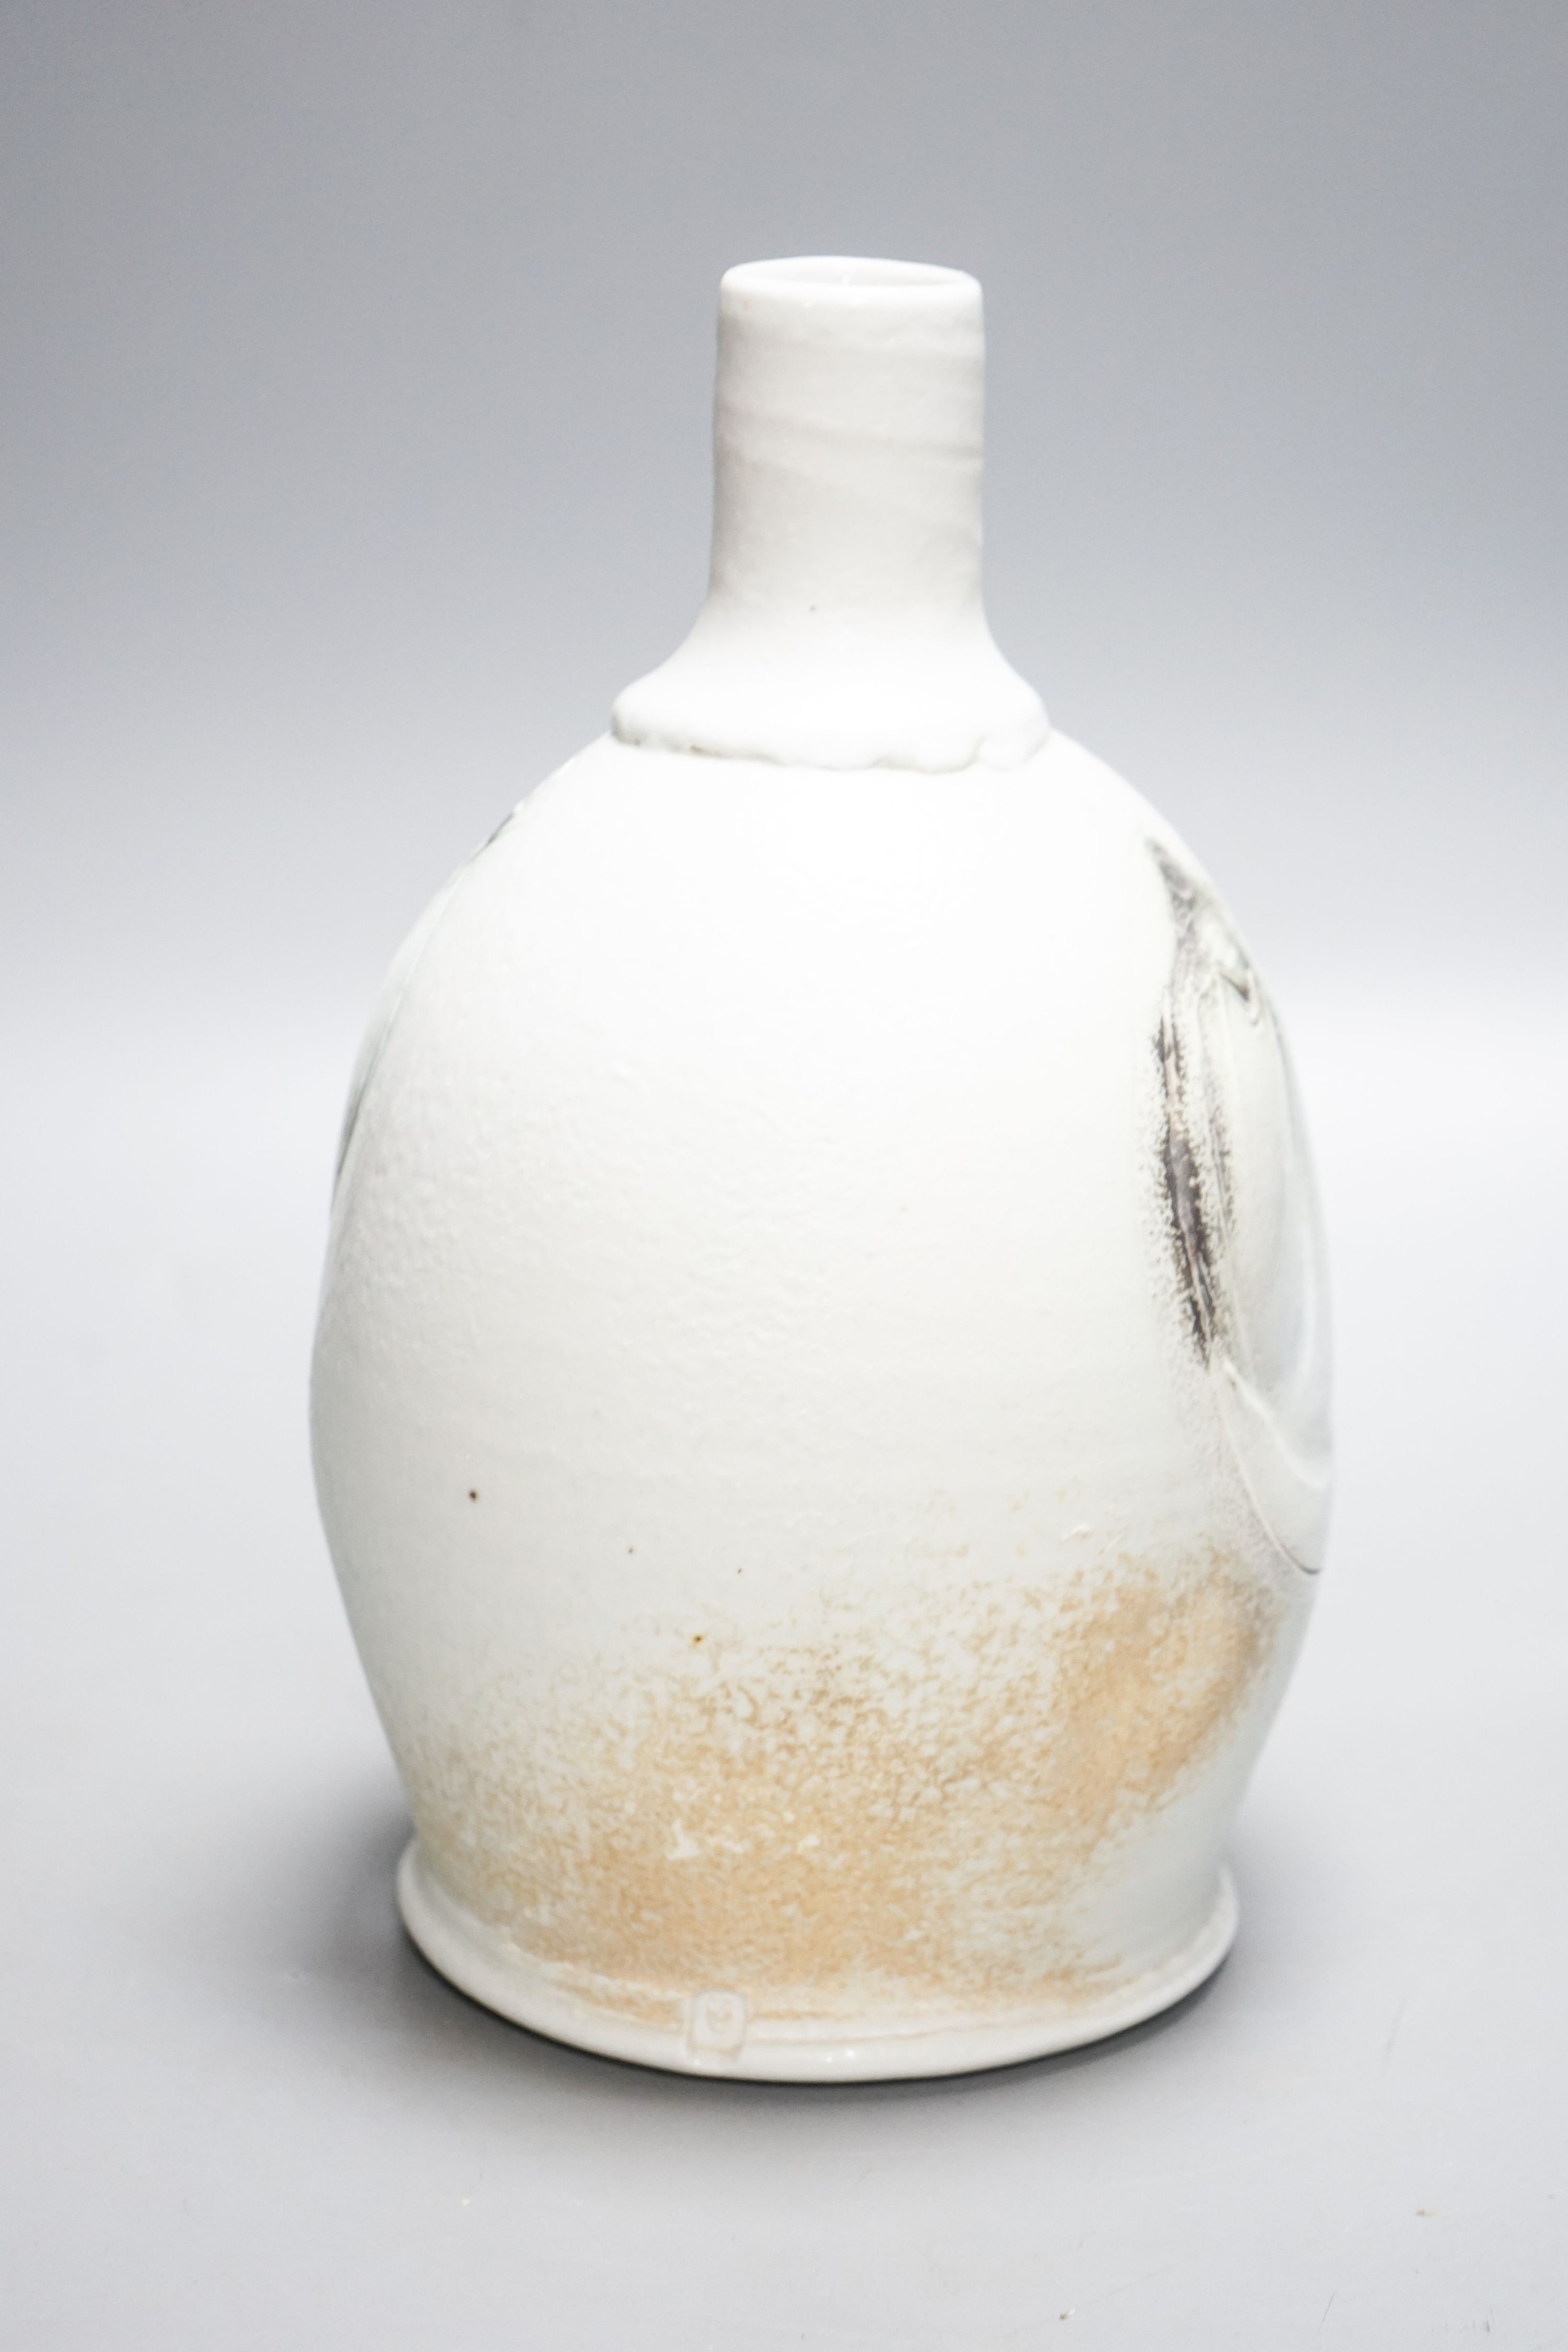 Jack Doherty (b.1948), an incised bottle vase 26cm